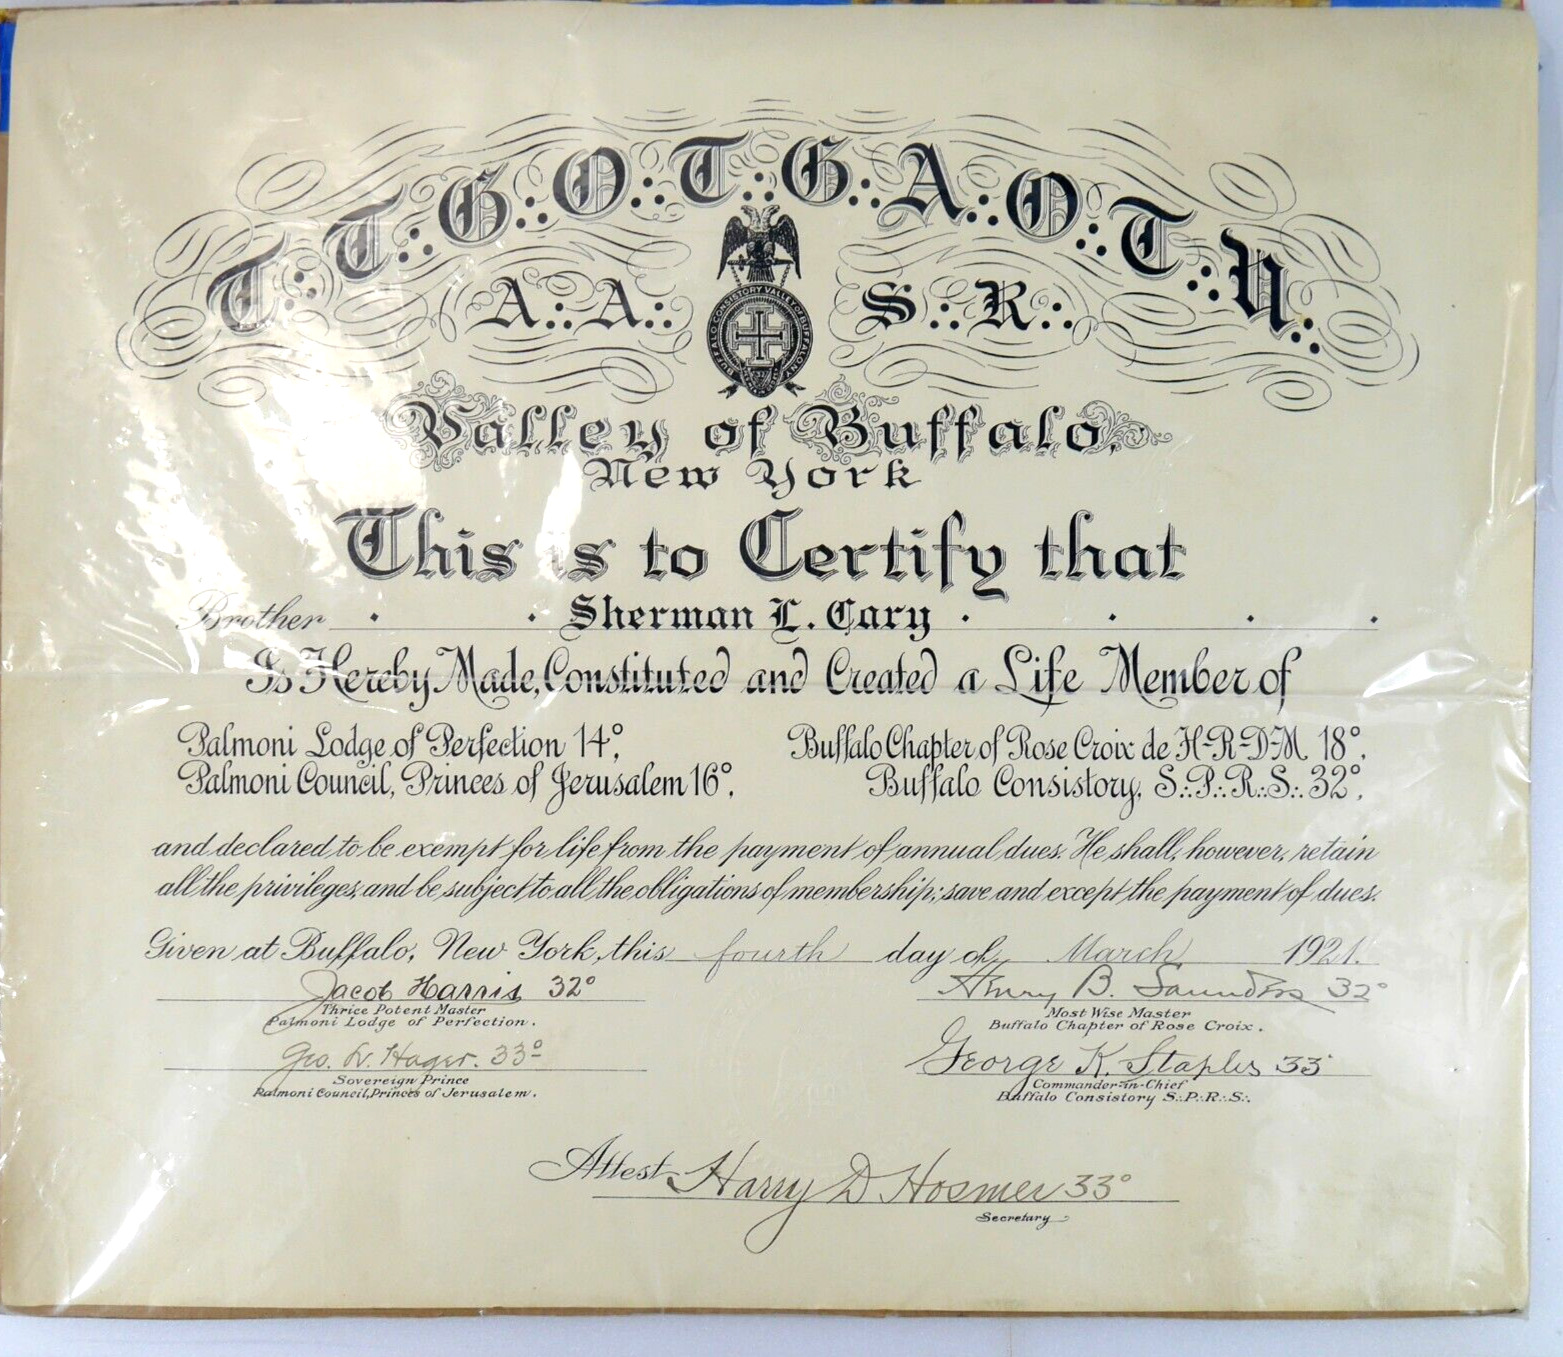 Vintage 1924 Masonic Lodge Certificate Valley of Buffalo New York AASR Palmoni